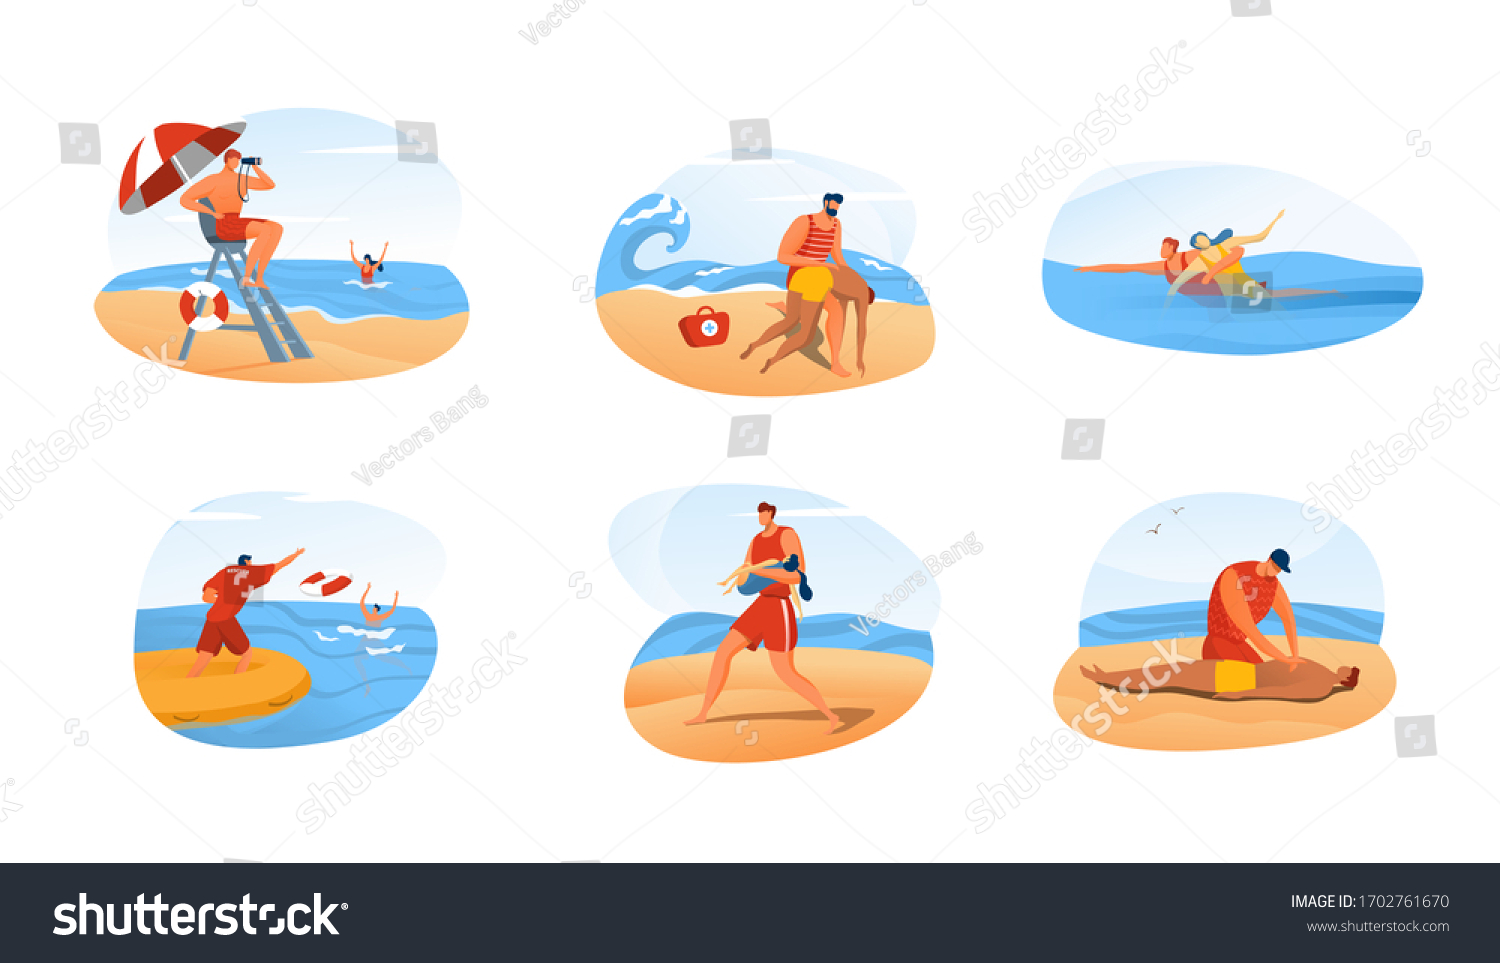 Lifeguard картинка для детей